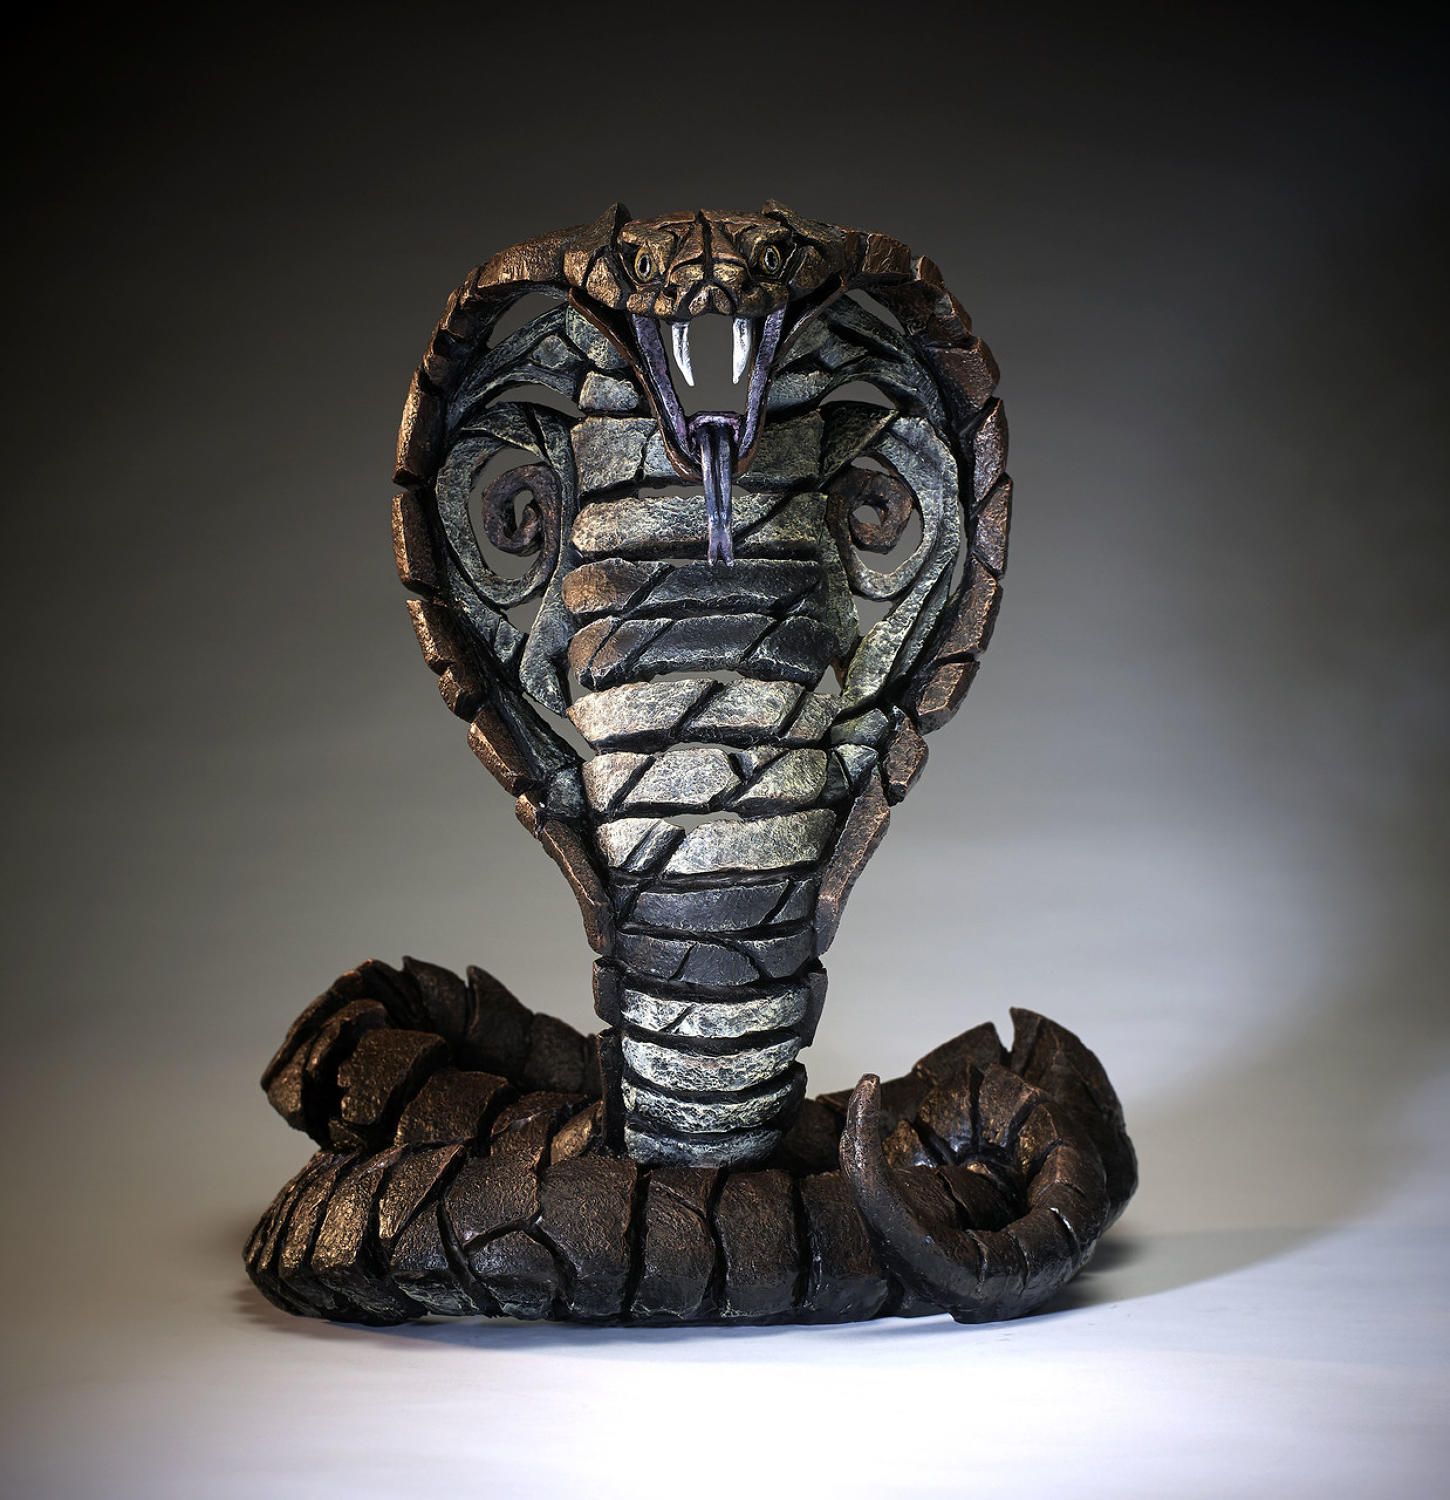 Edge sculpture - Cobra copper brown